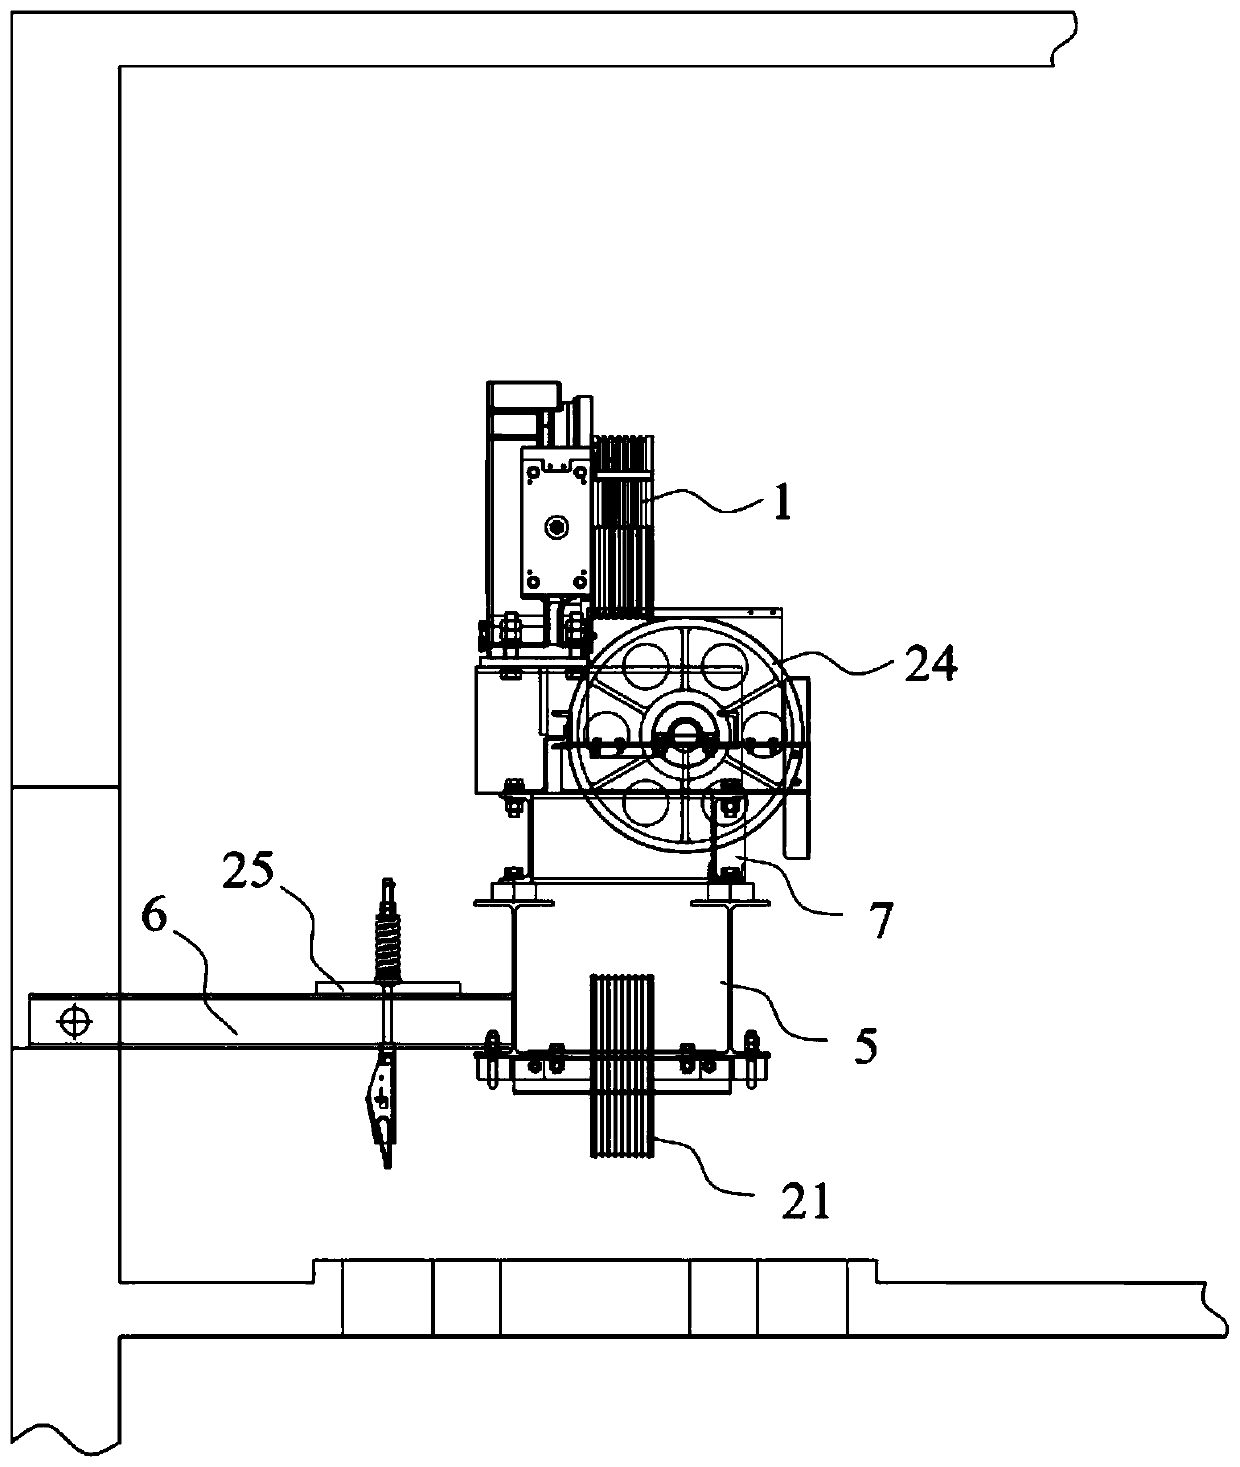 Elevator machine room arranging structure and elevator system